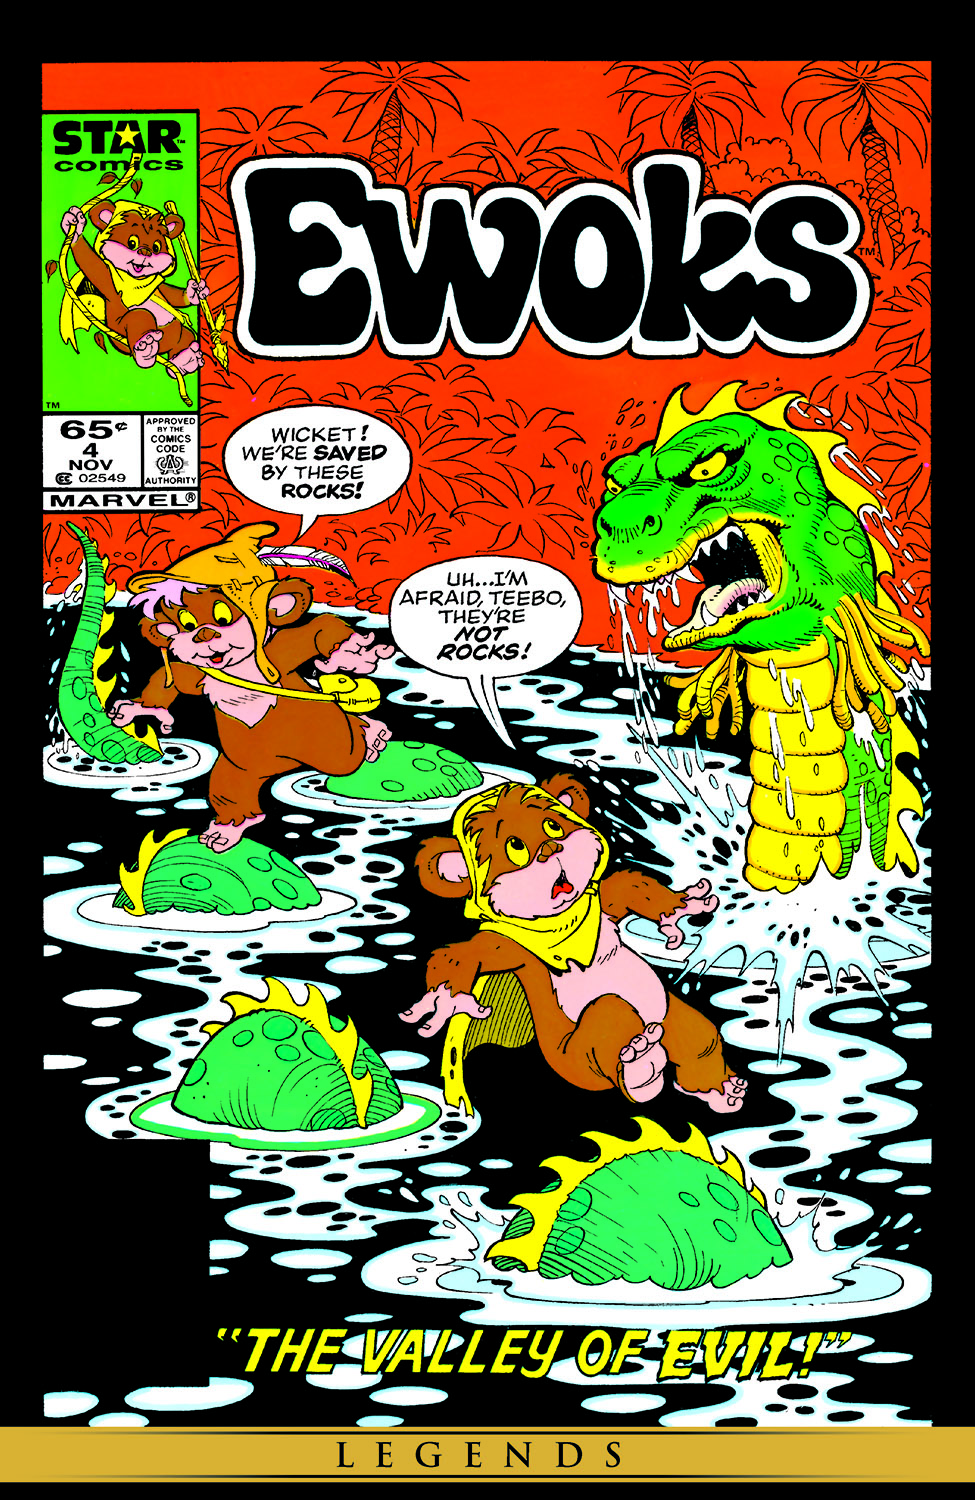 Star Wars: Ewoks (1985) #4